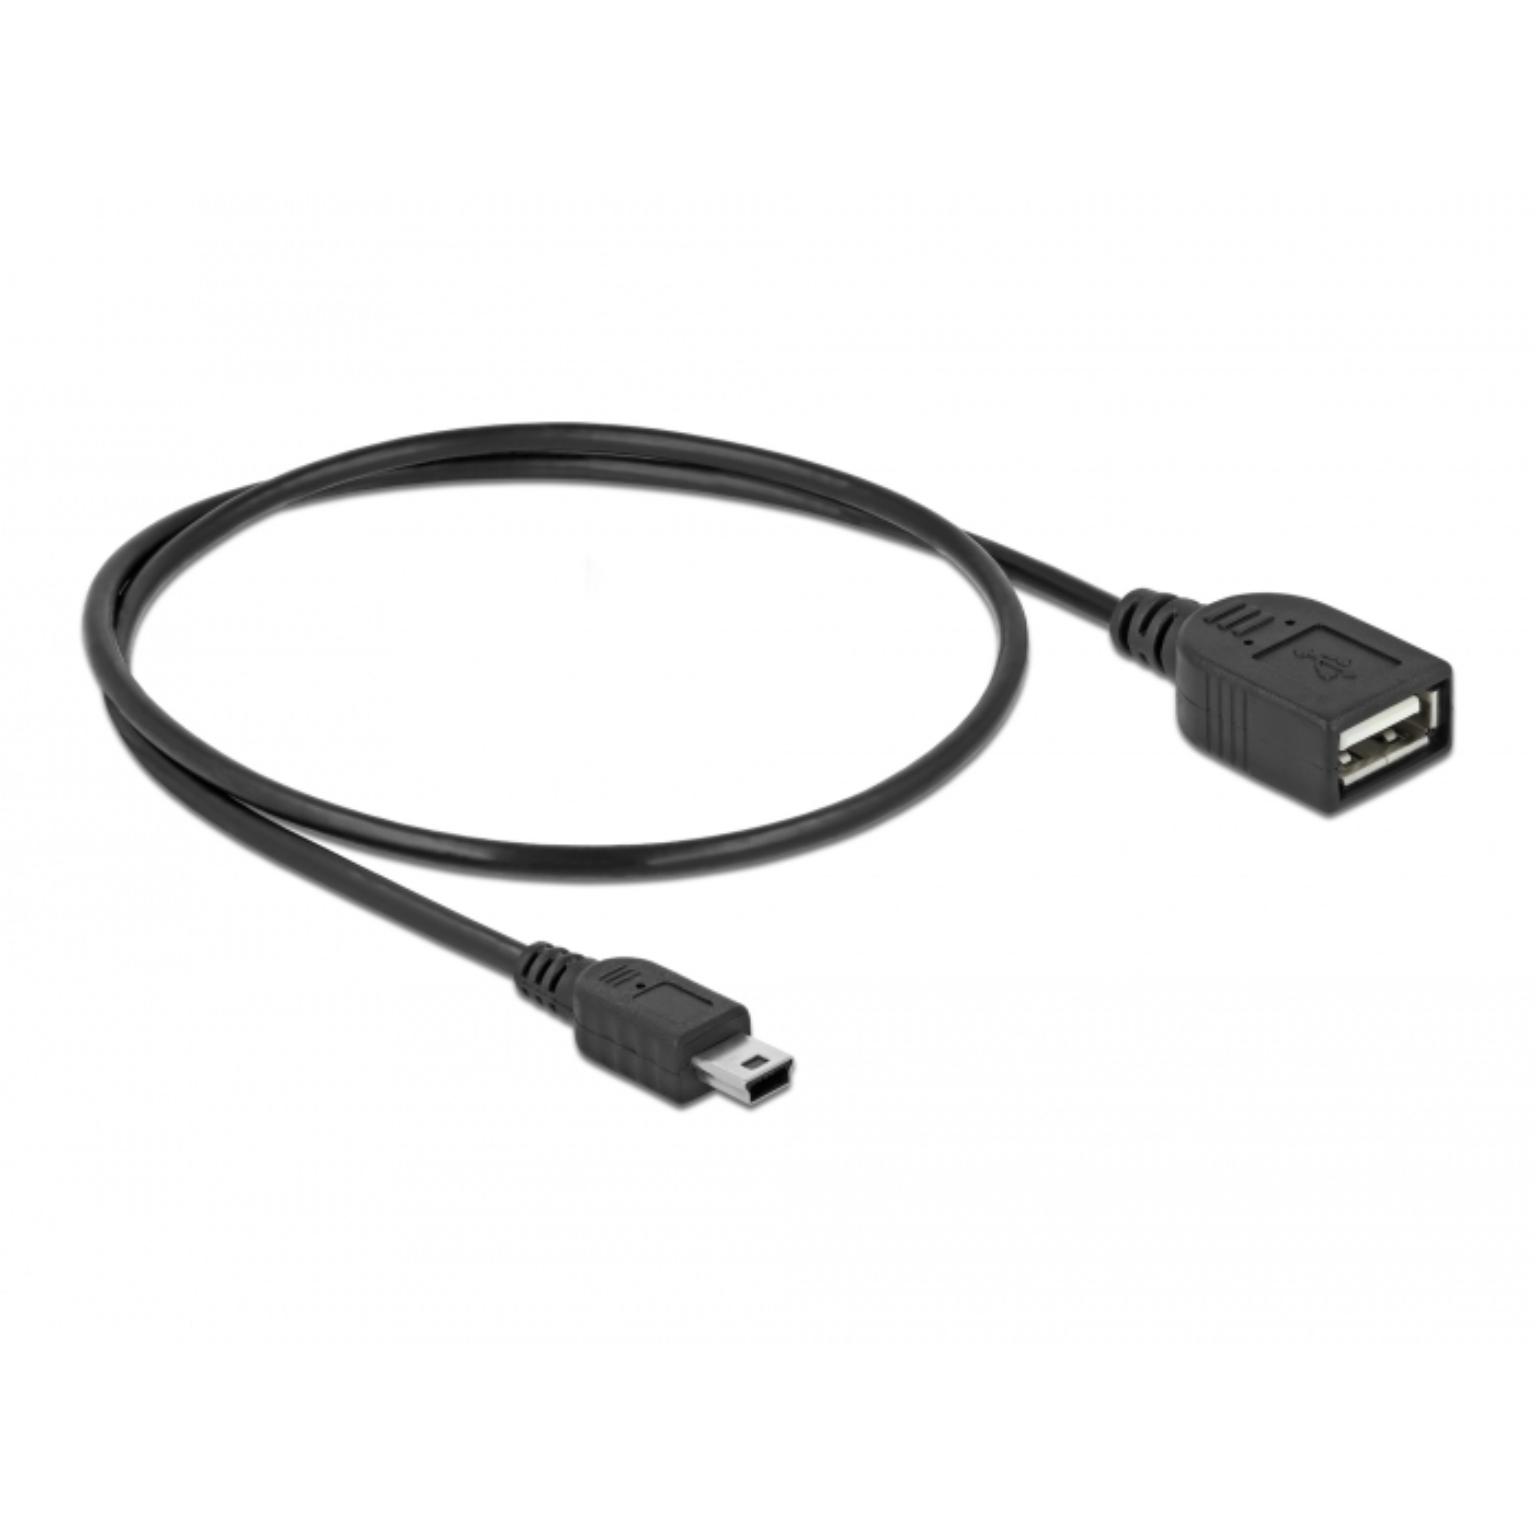 MINI USB 2.0 USB kabel, Connector 1: USB A female, Connector 2: 5p mini USB B male, 0.5 meter.